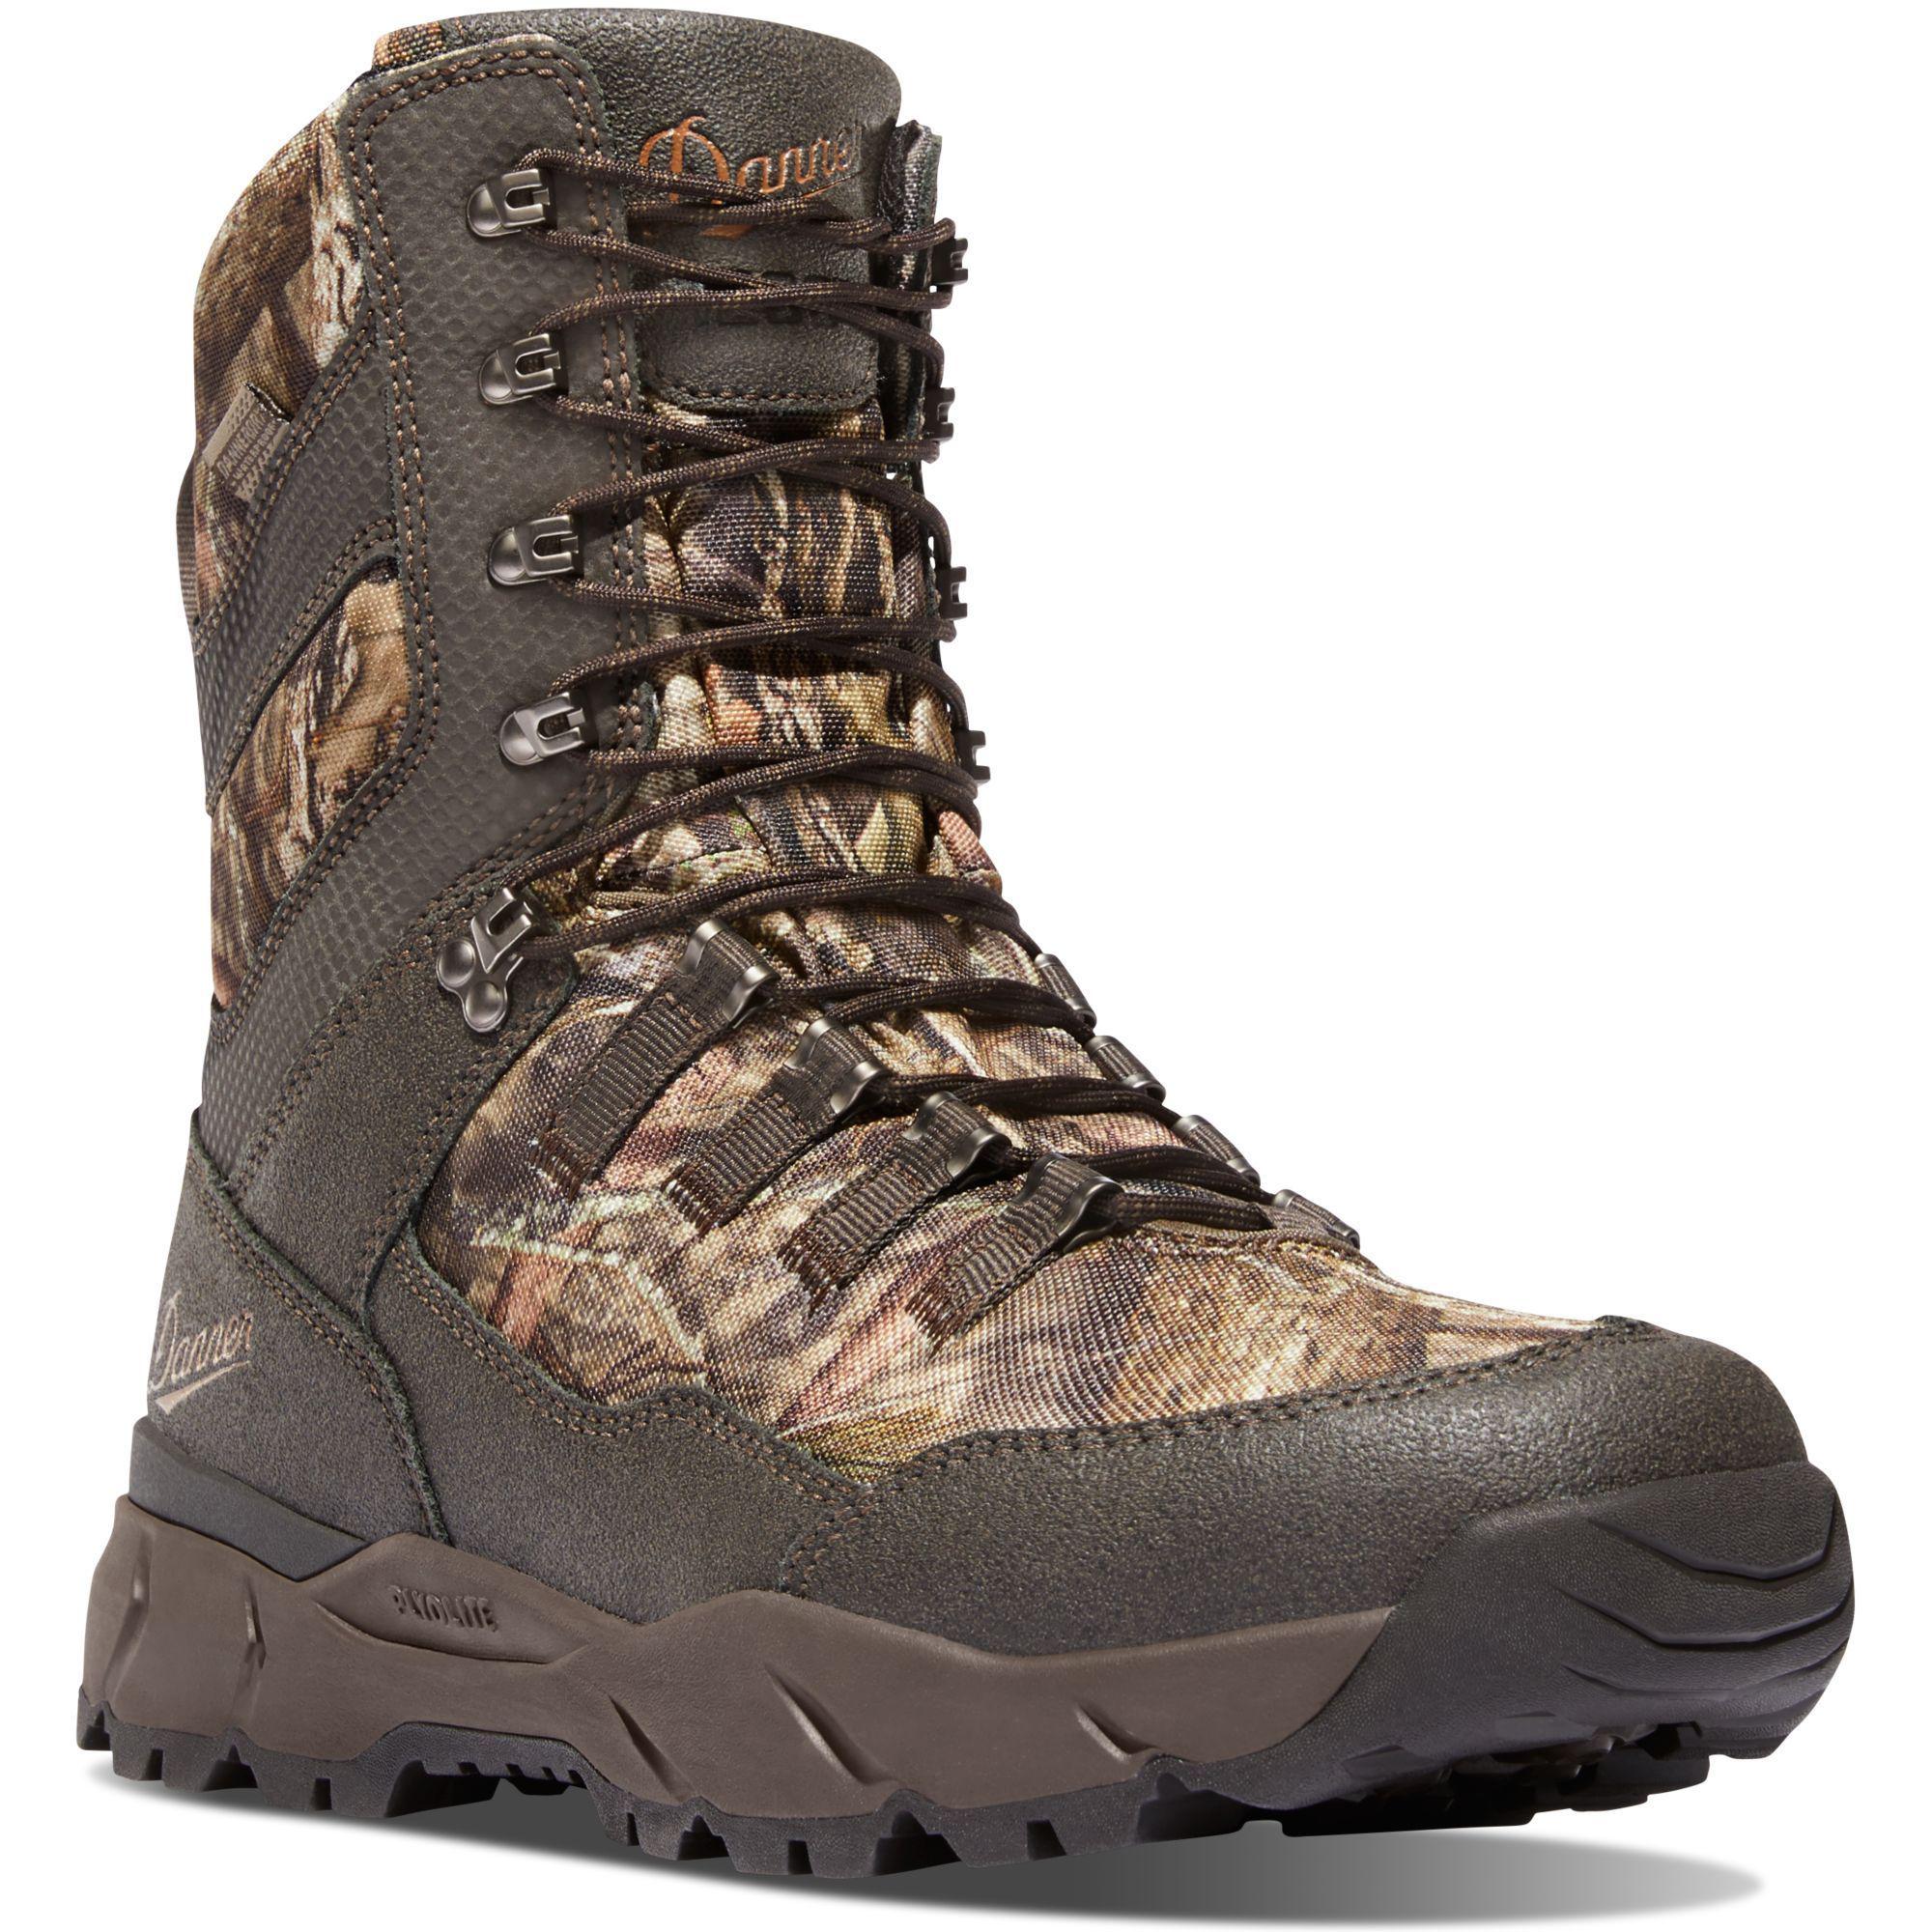 Danner Men's Vital 8" 800G Insulated WP Hunt Boot - Mossy Oak - 41555 7 / Medium / Mossy Oak - Overlook Boots